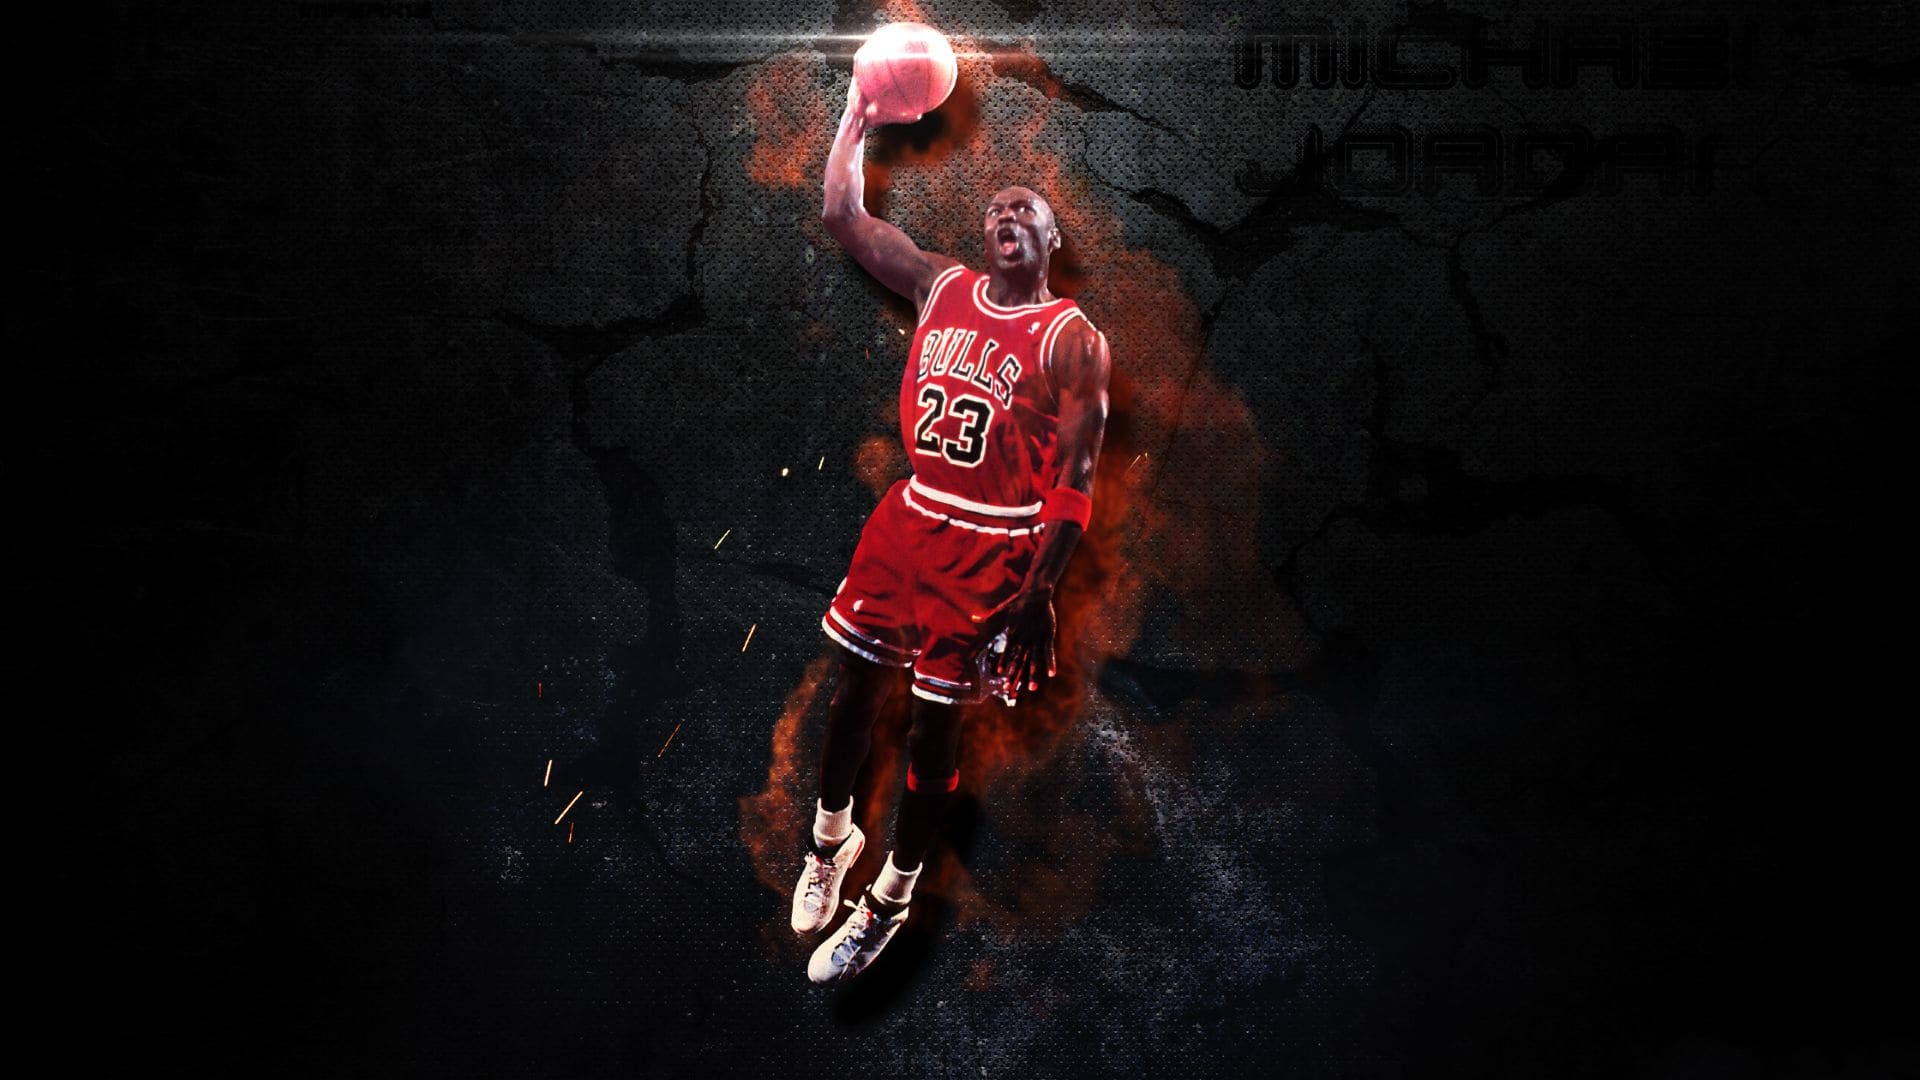 Michael Jordan Wallpaper Best Michael Jordan Wallpaper & Background Download